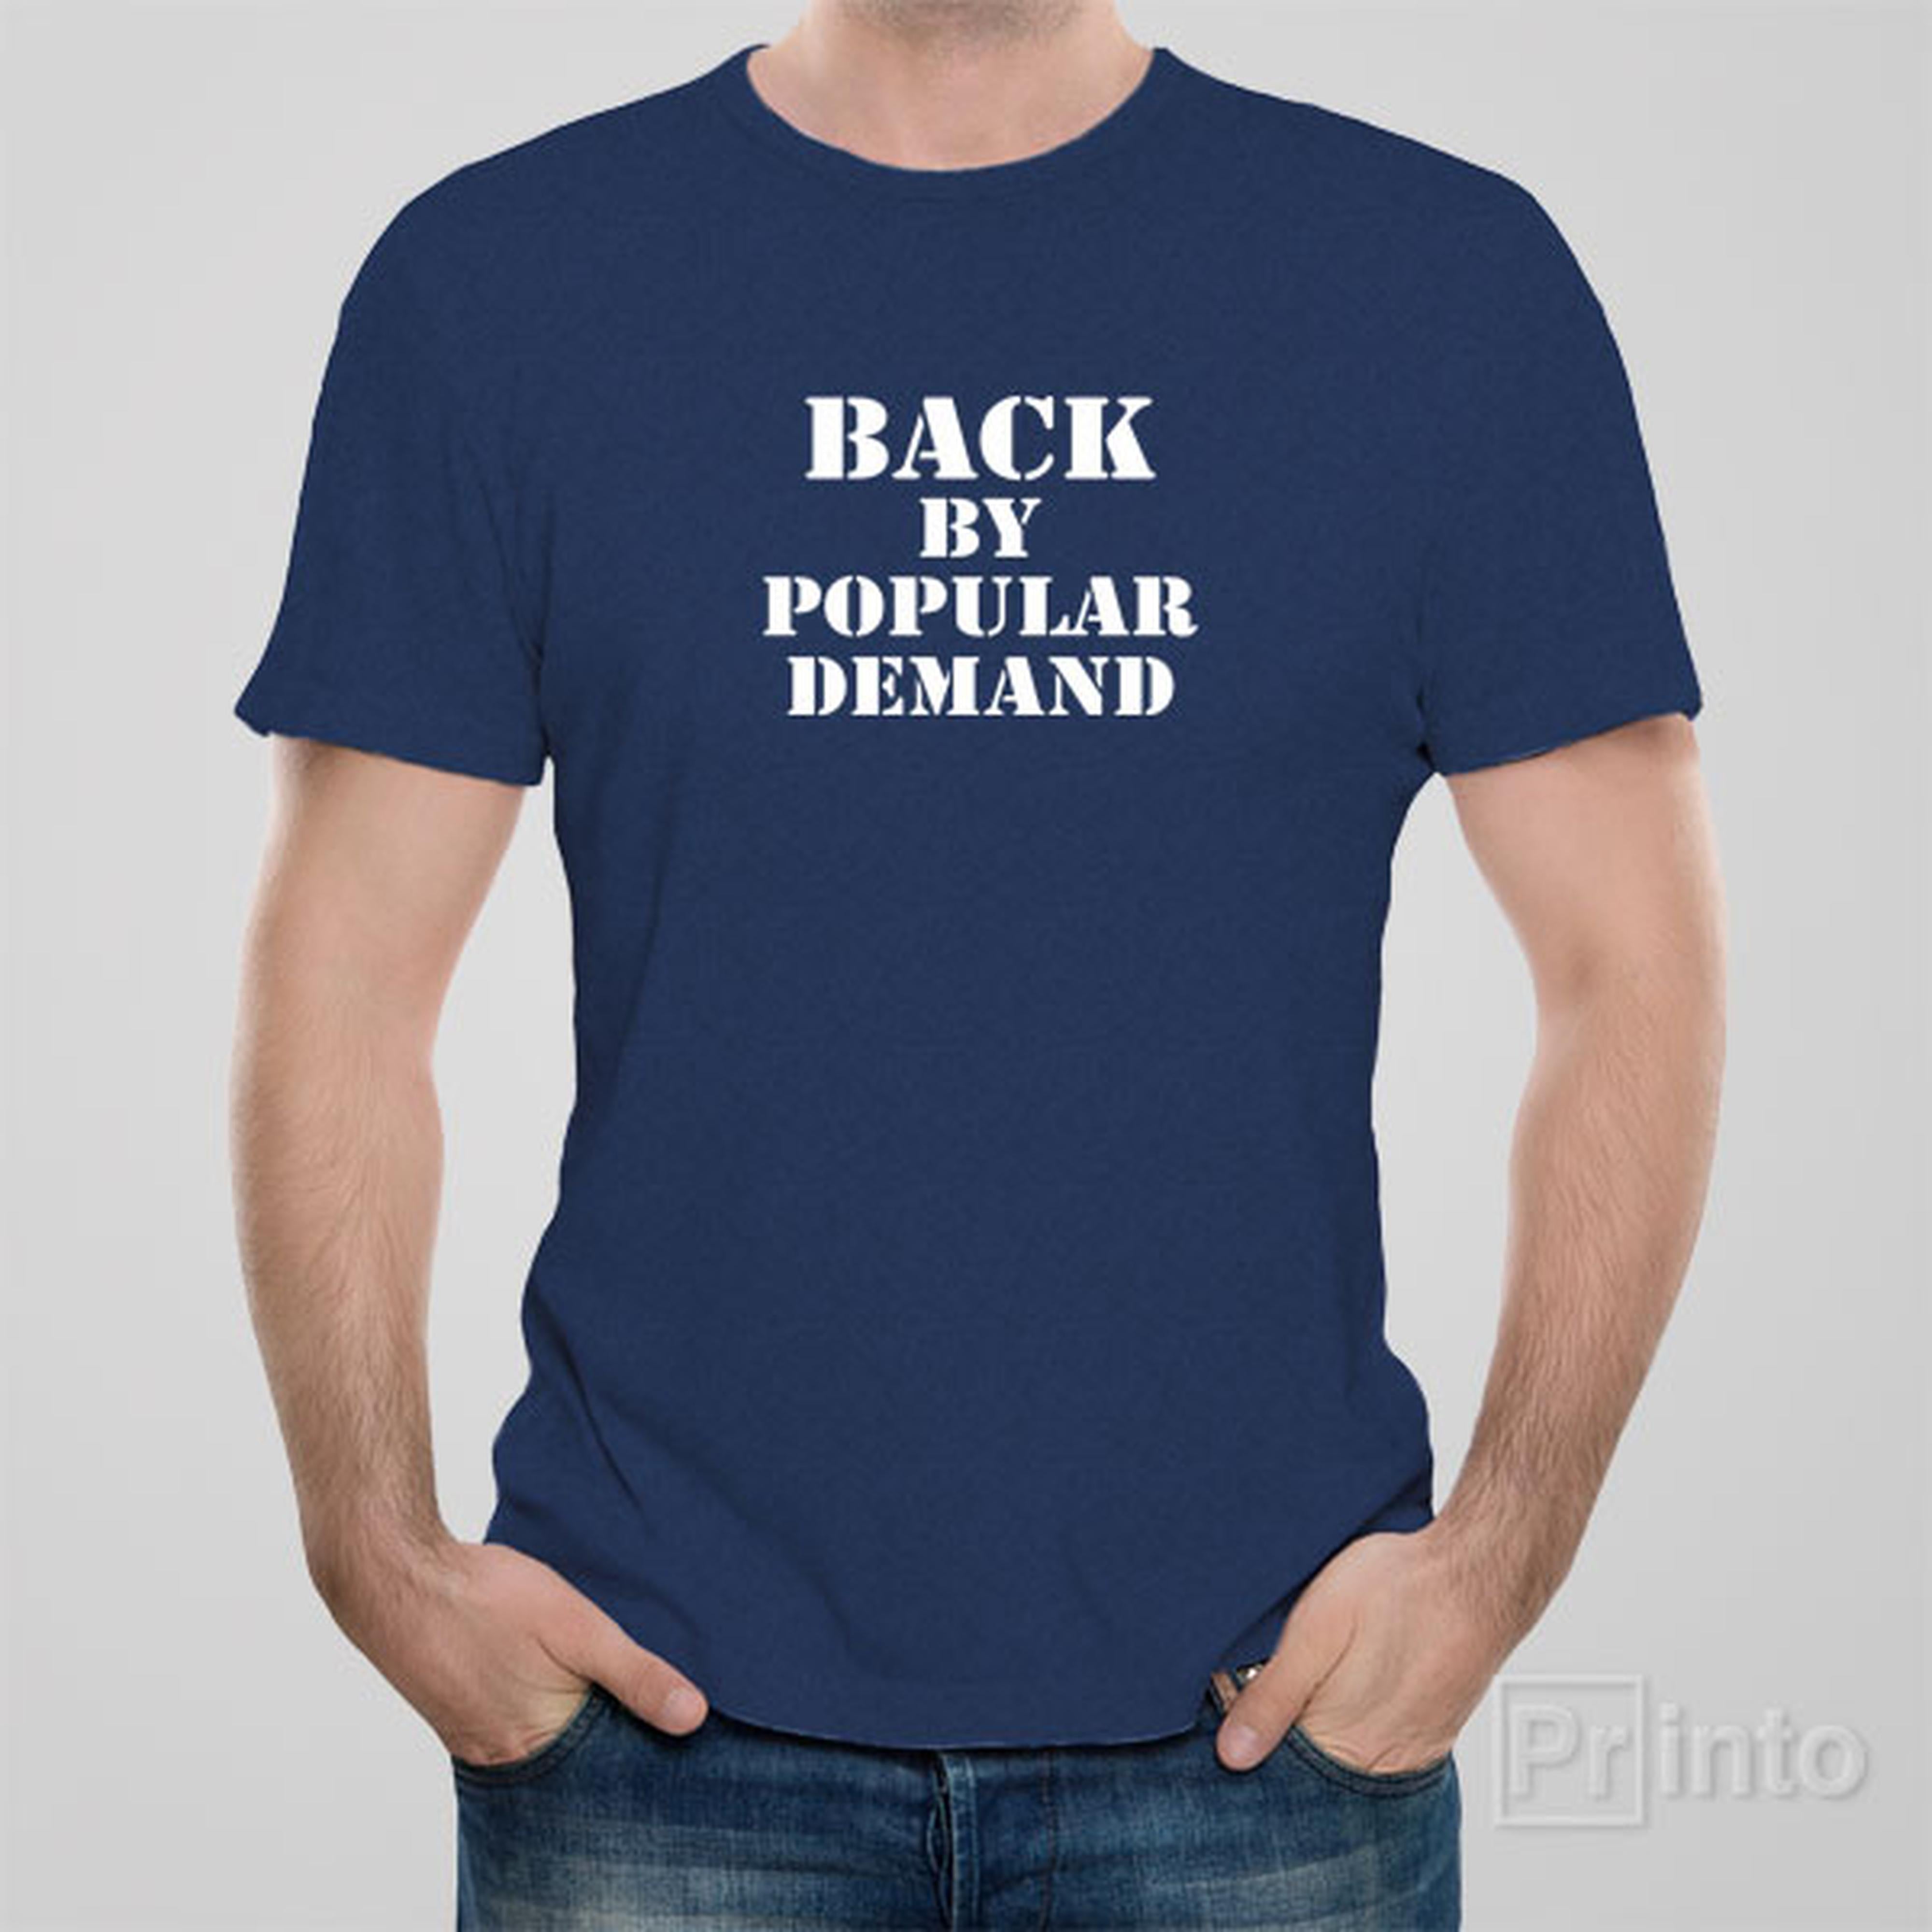 back-by-popular-demand-t-shirt